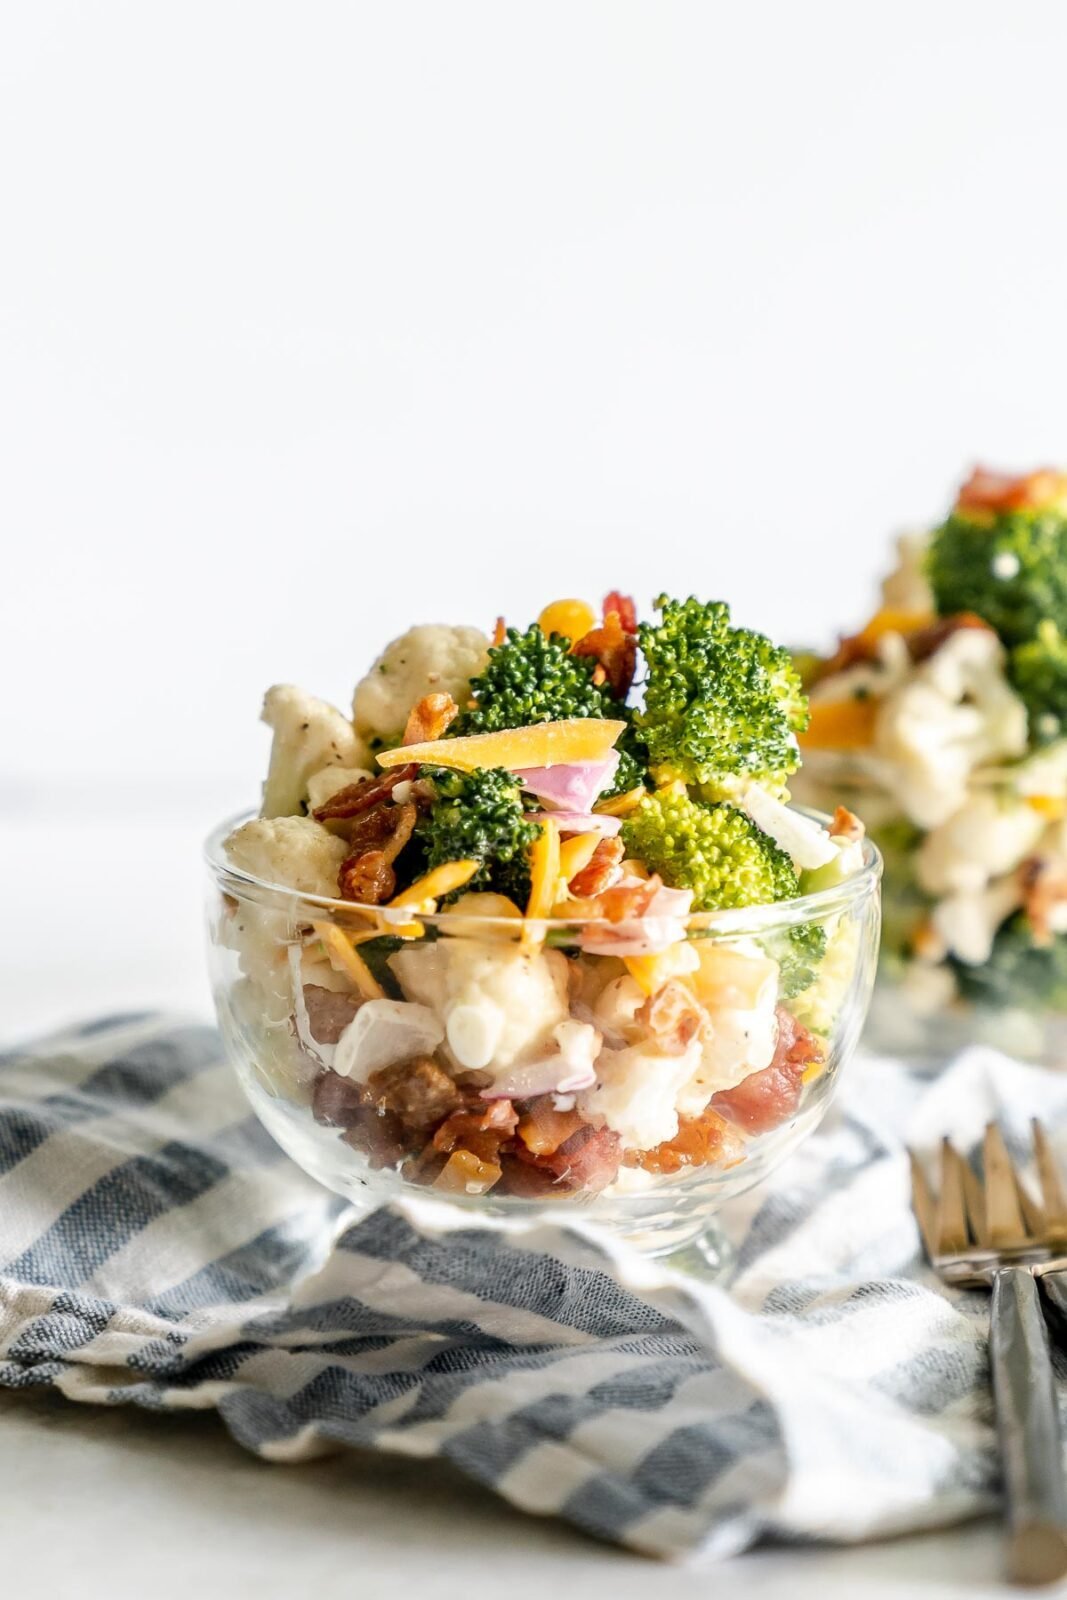 Best Keto Broccoli Salad Recipe